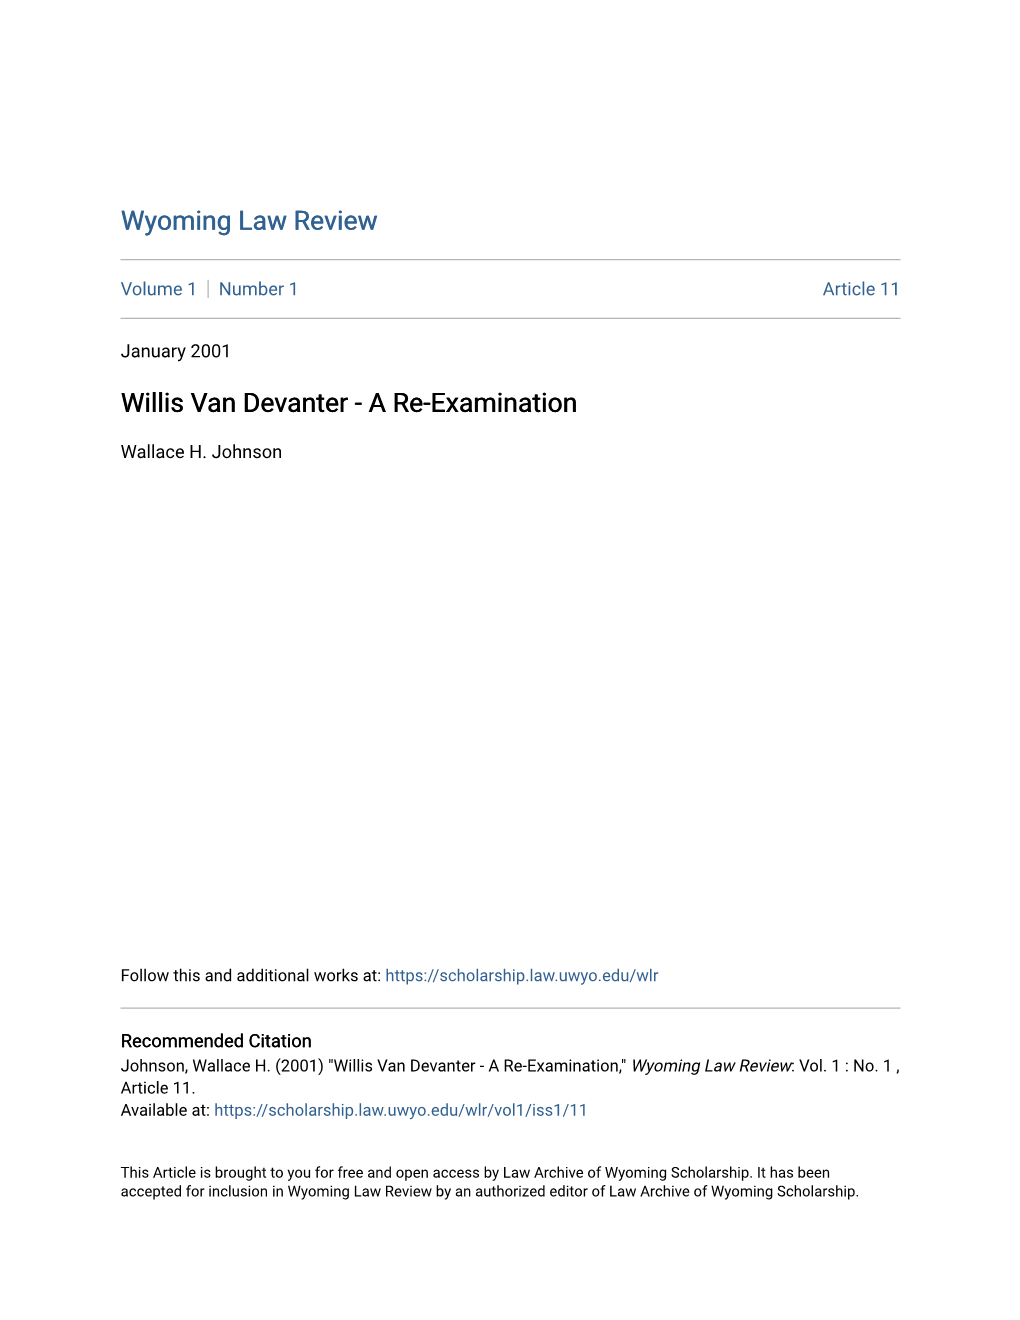 Willis Van Devanter - a Re-Examination